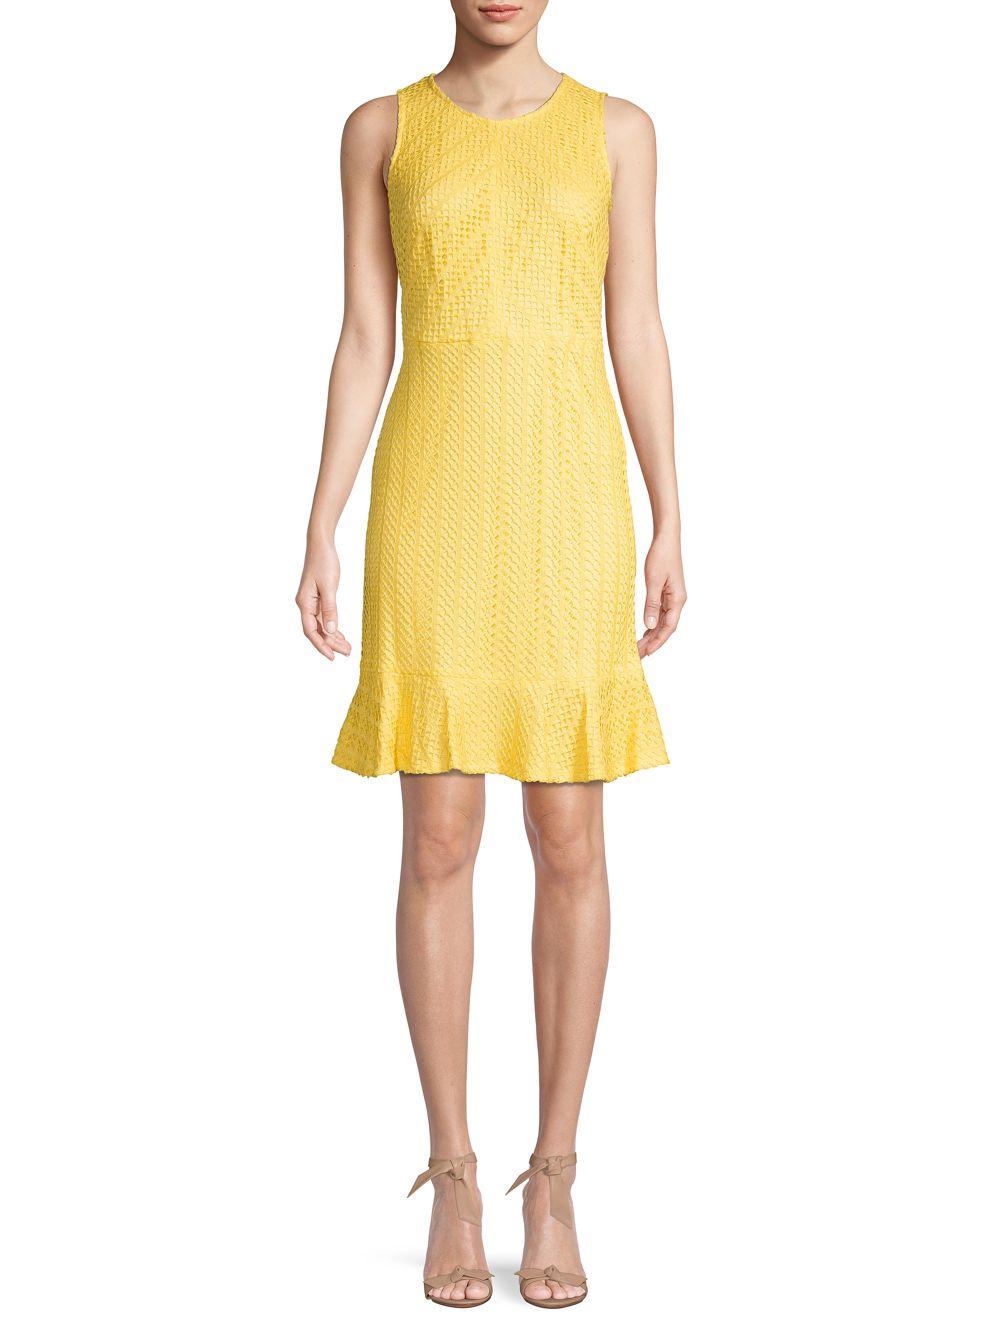 Karl Lagerfeld Ruffled Crochet Sheath Dress in Yellow - Save 24% - Lyst